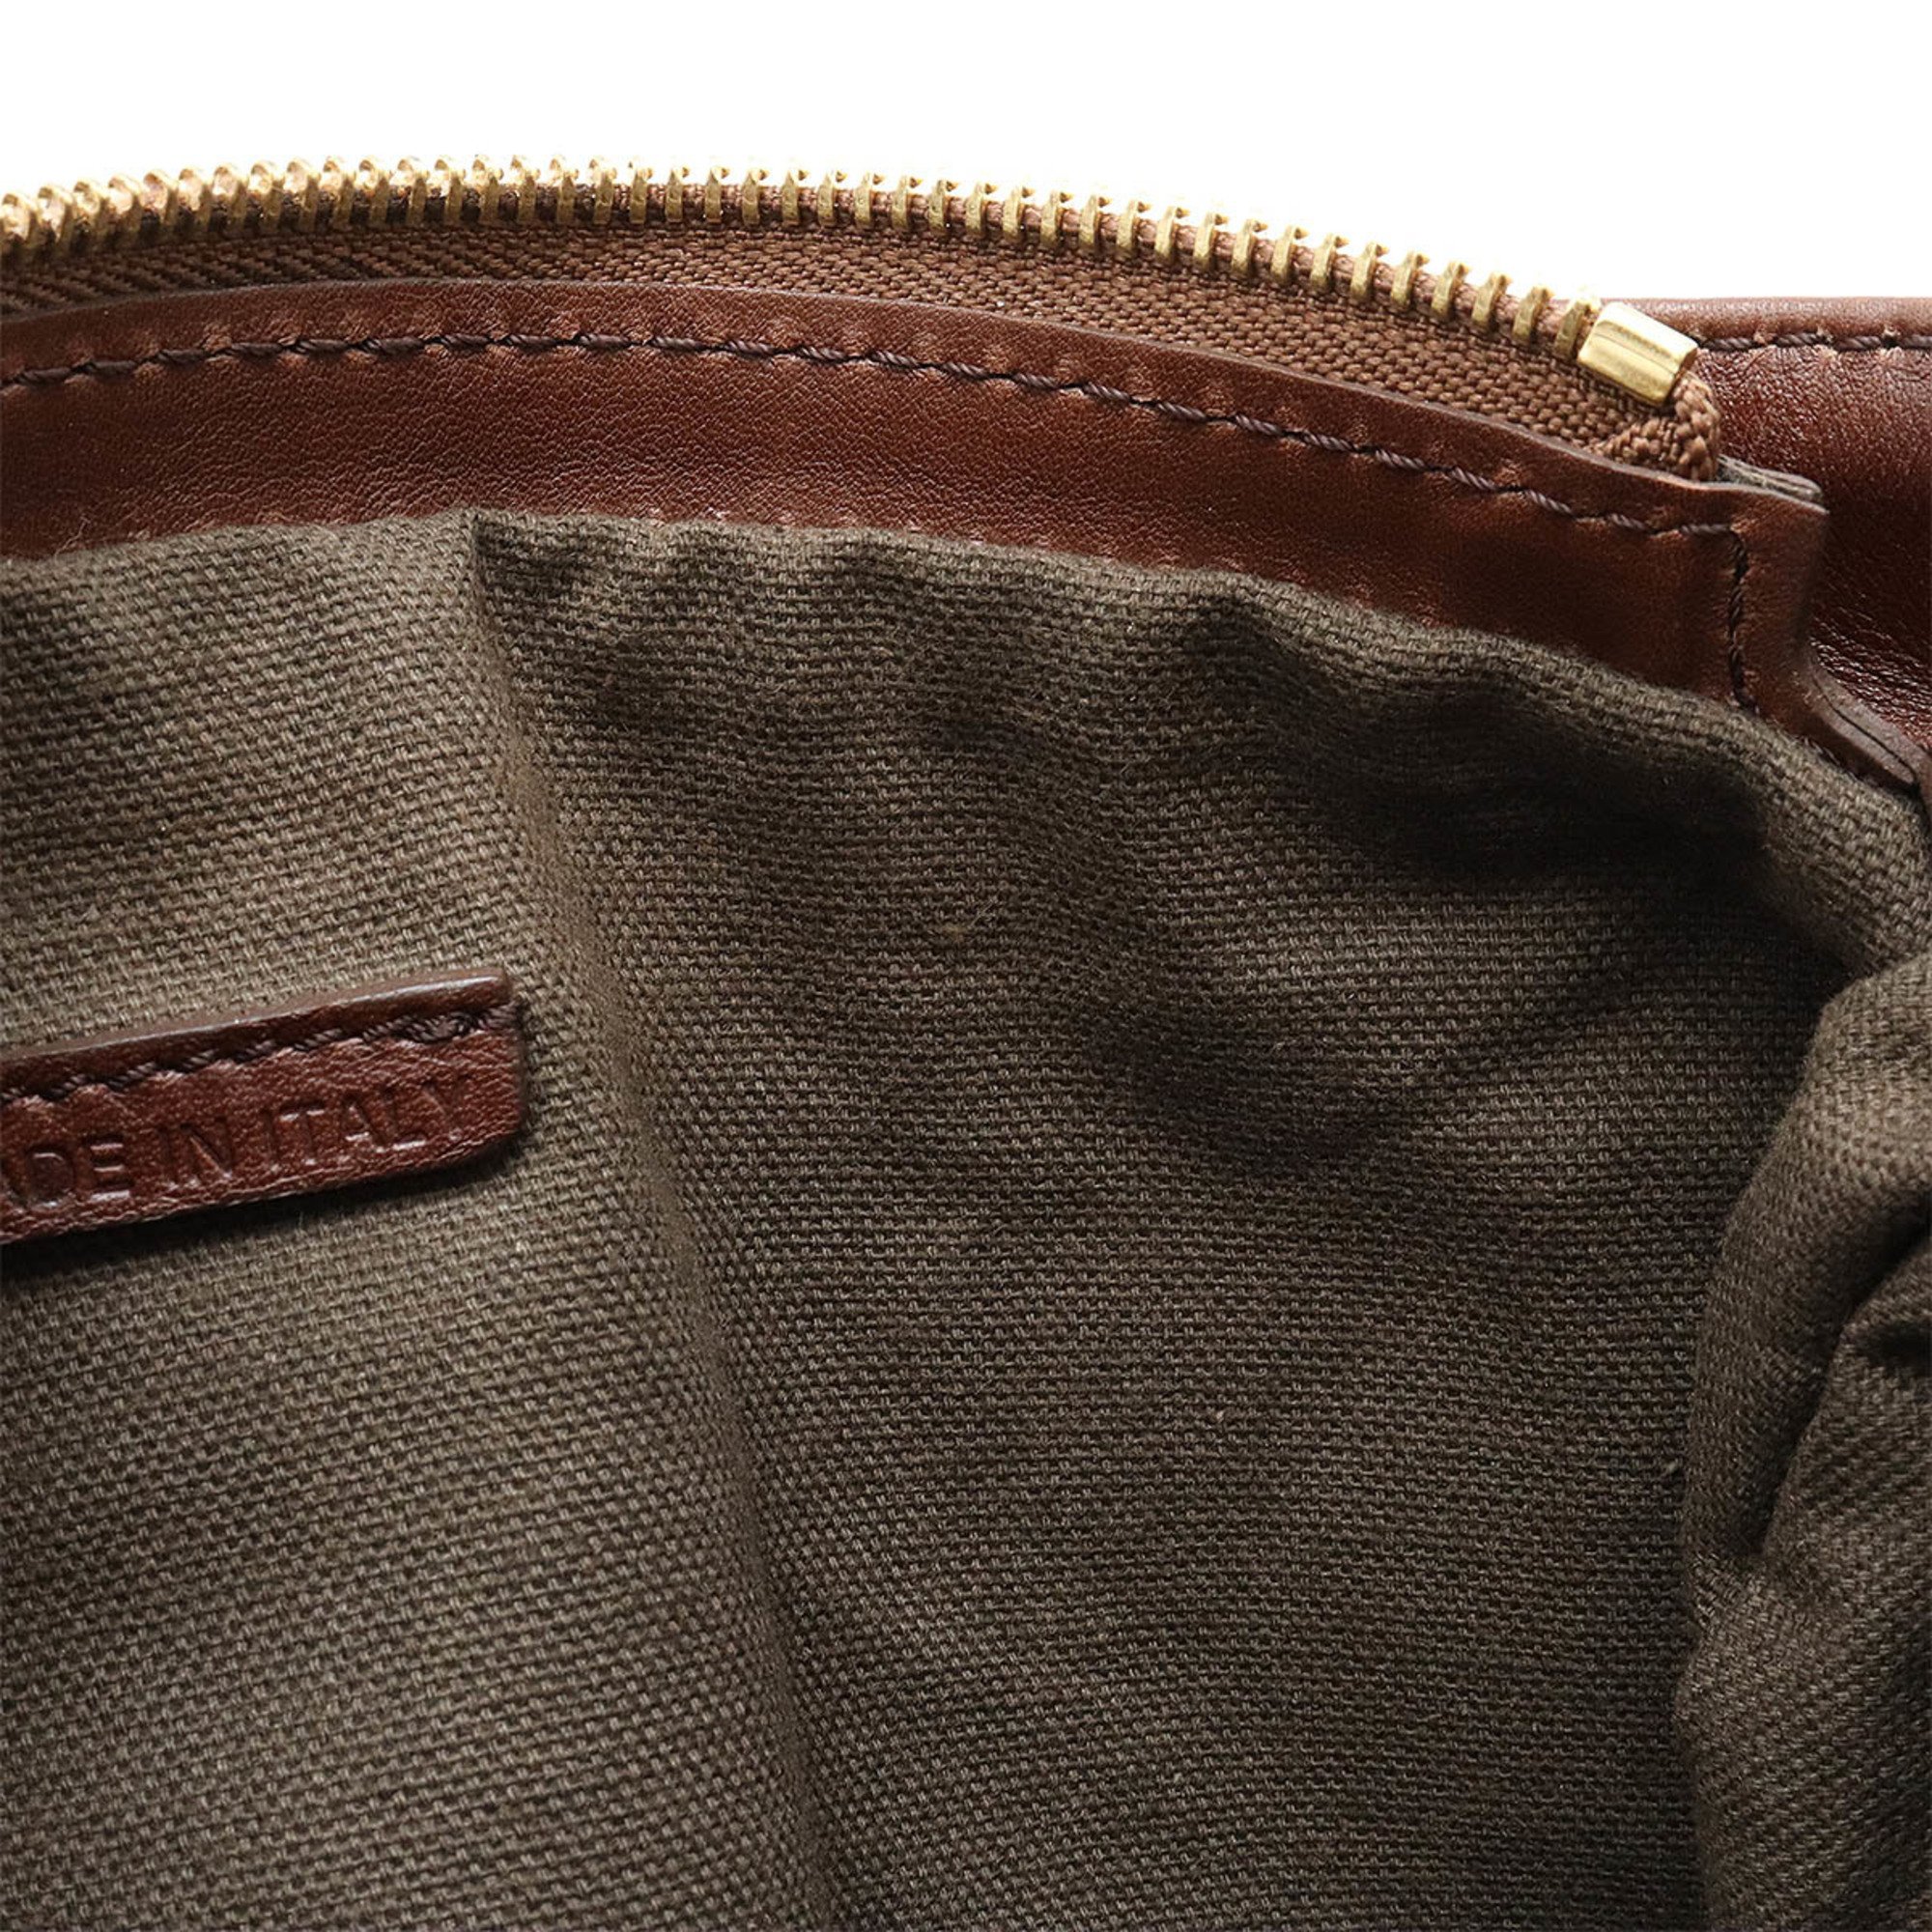 BURBERRY Smoked Check Chain Shoulder Bag PVC Leather Dark Khaki Brown